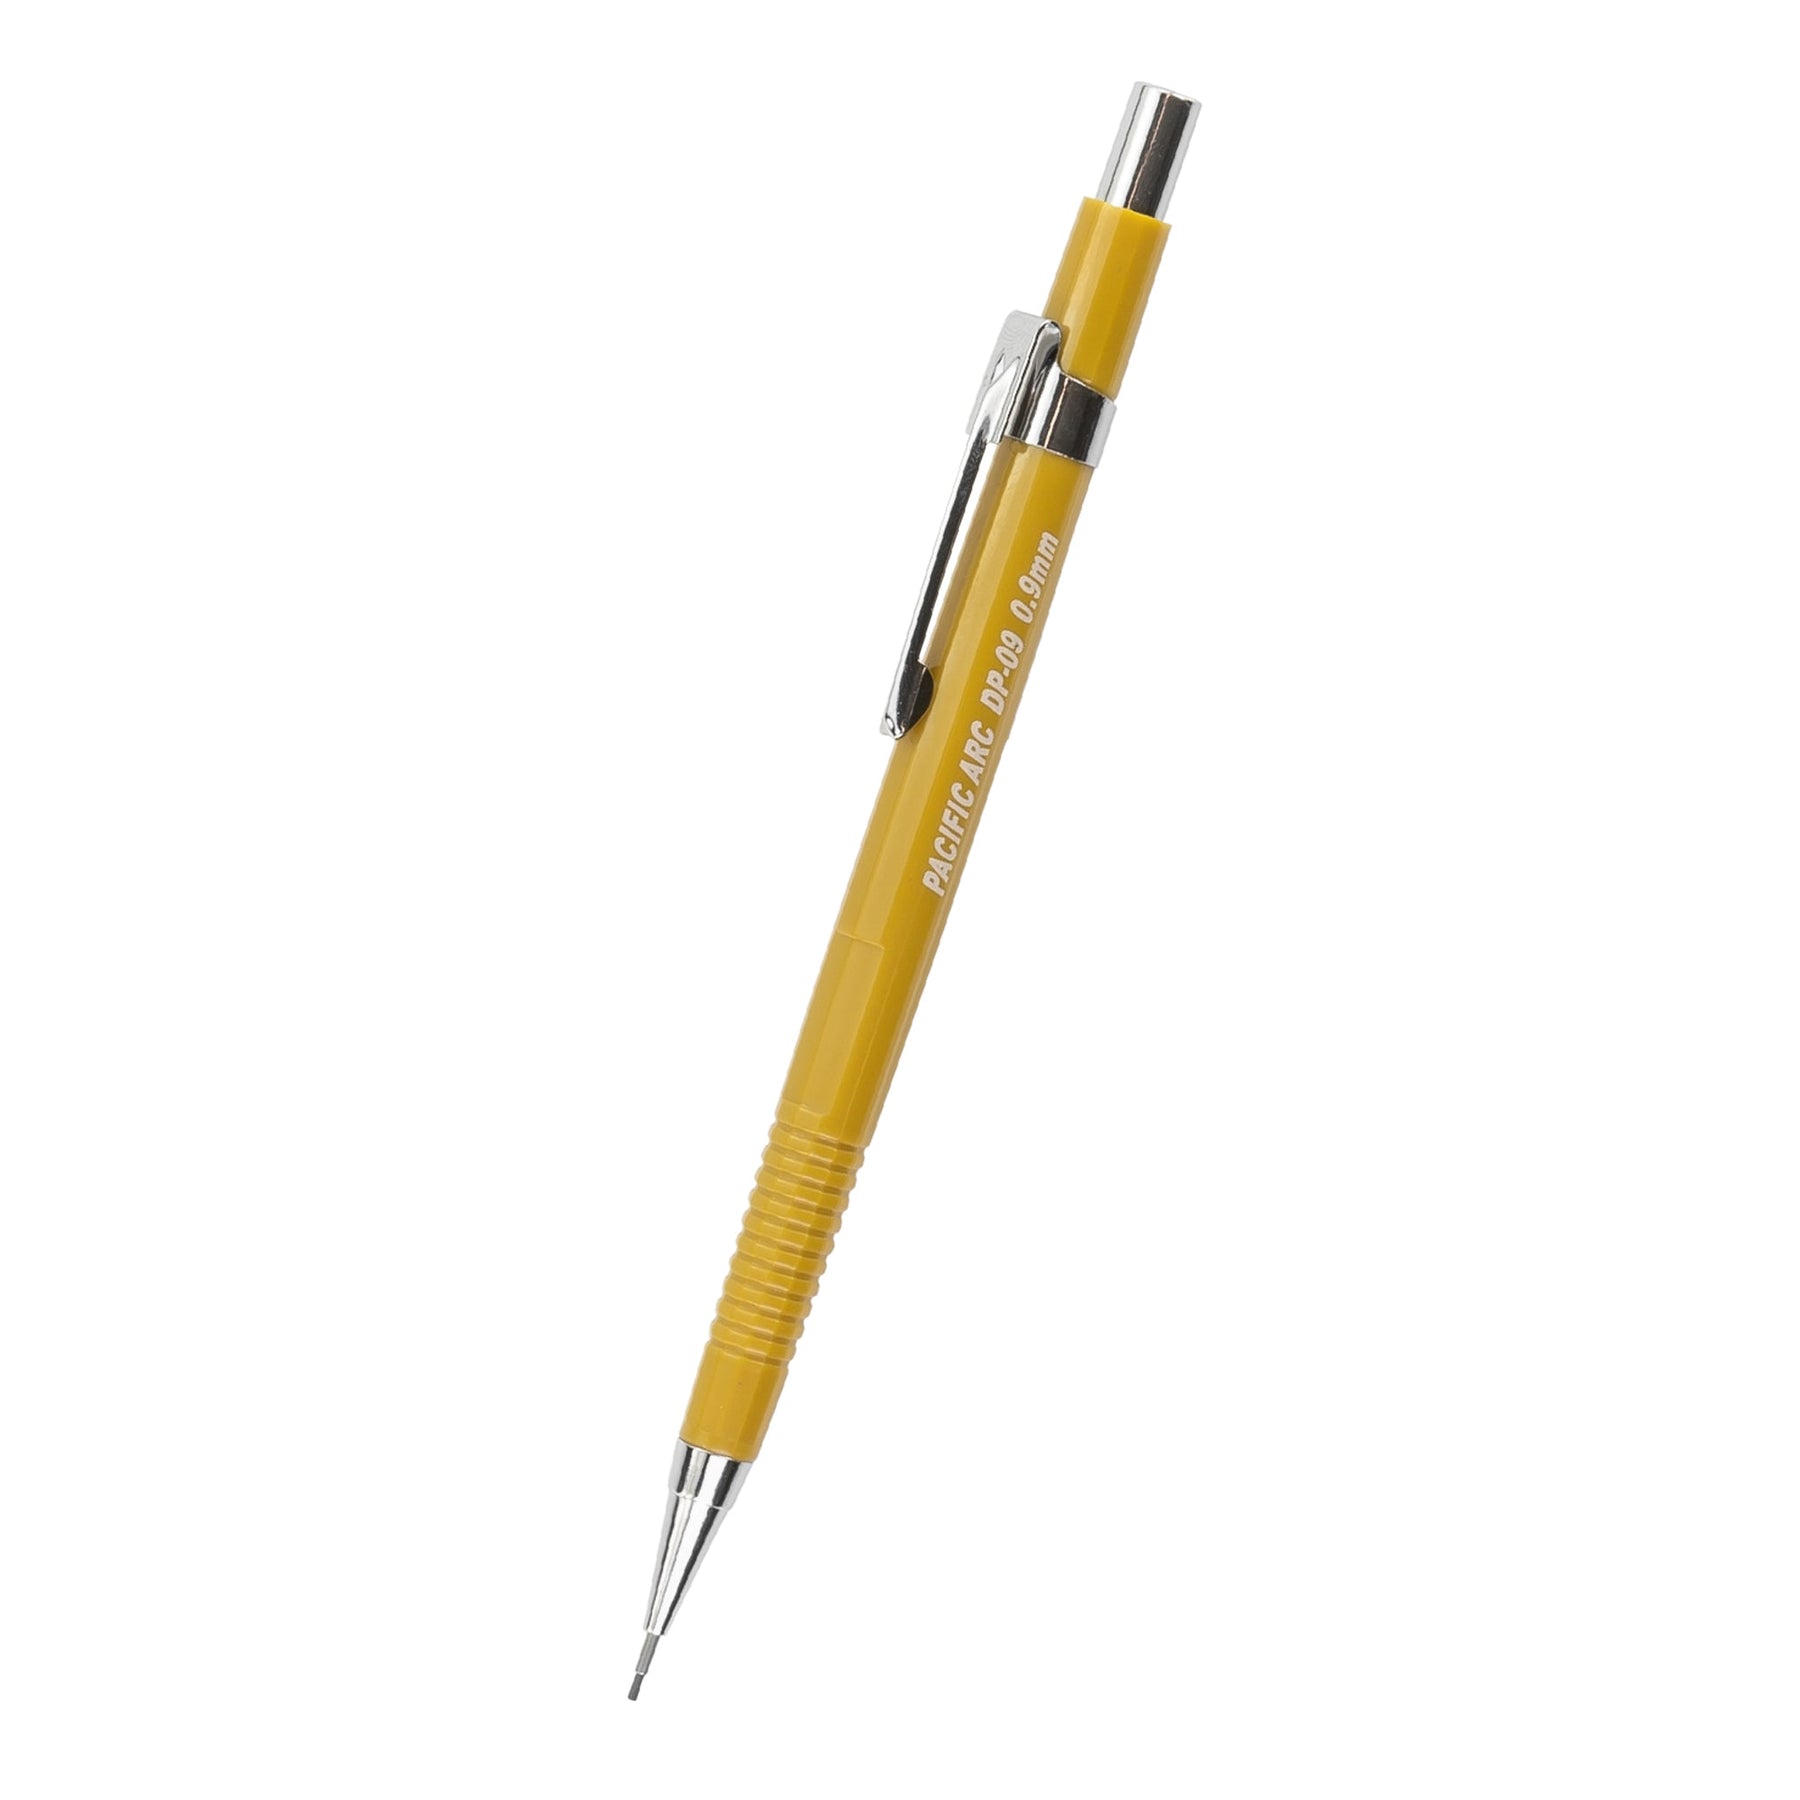  Mood Mechanical Pencil 156115